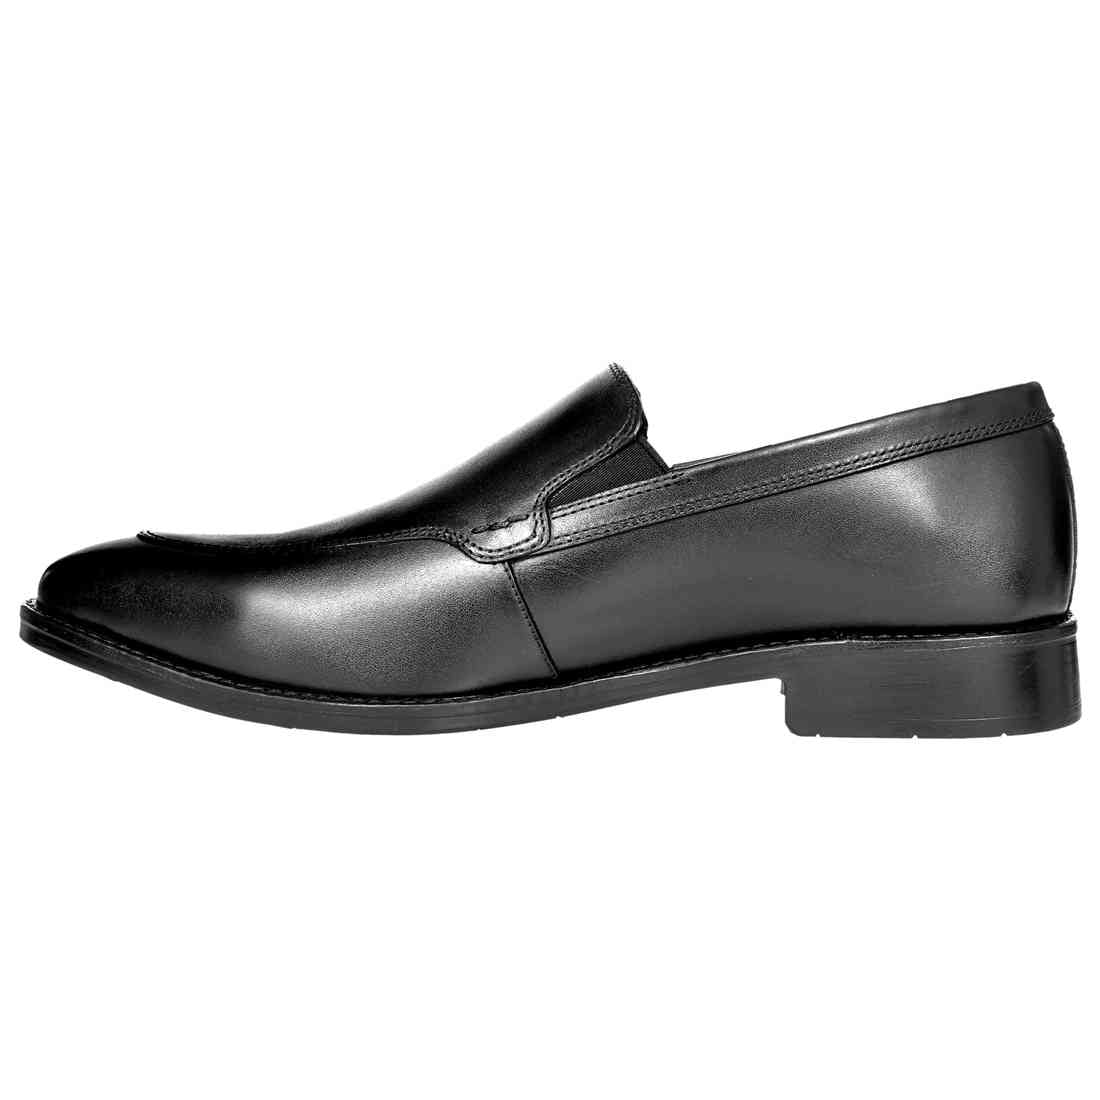 OHM New York Double Stitched Hybrid Leather Slip-on Shoes